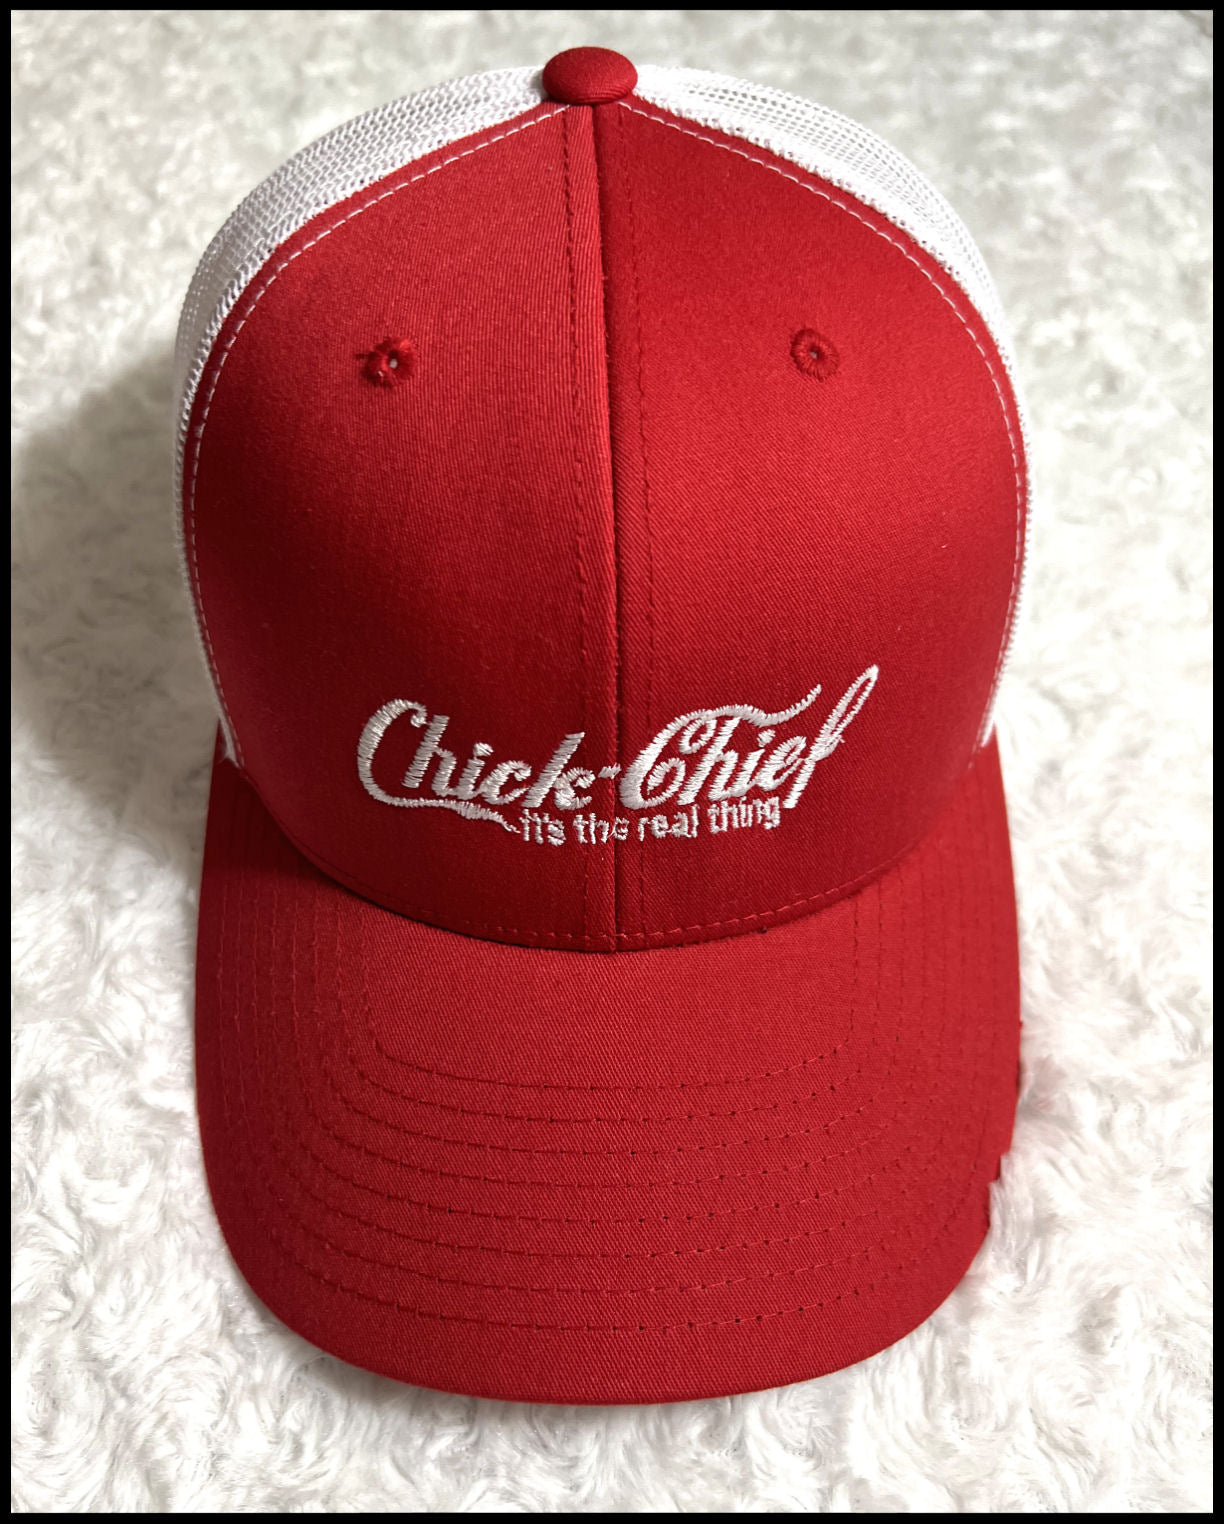 Chick Chief Red & White Trucker Hat